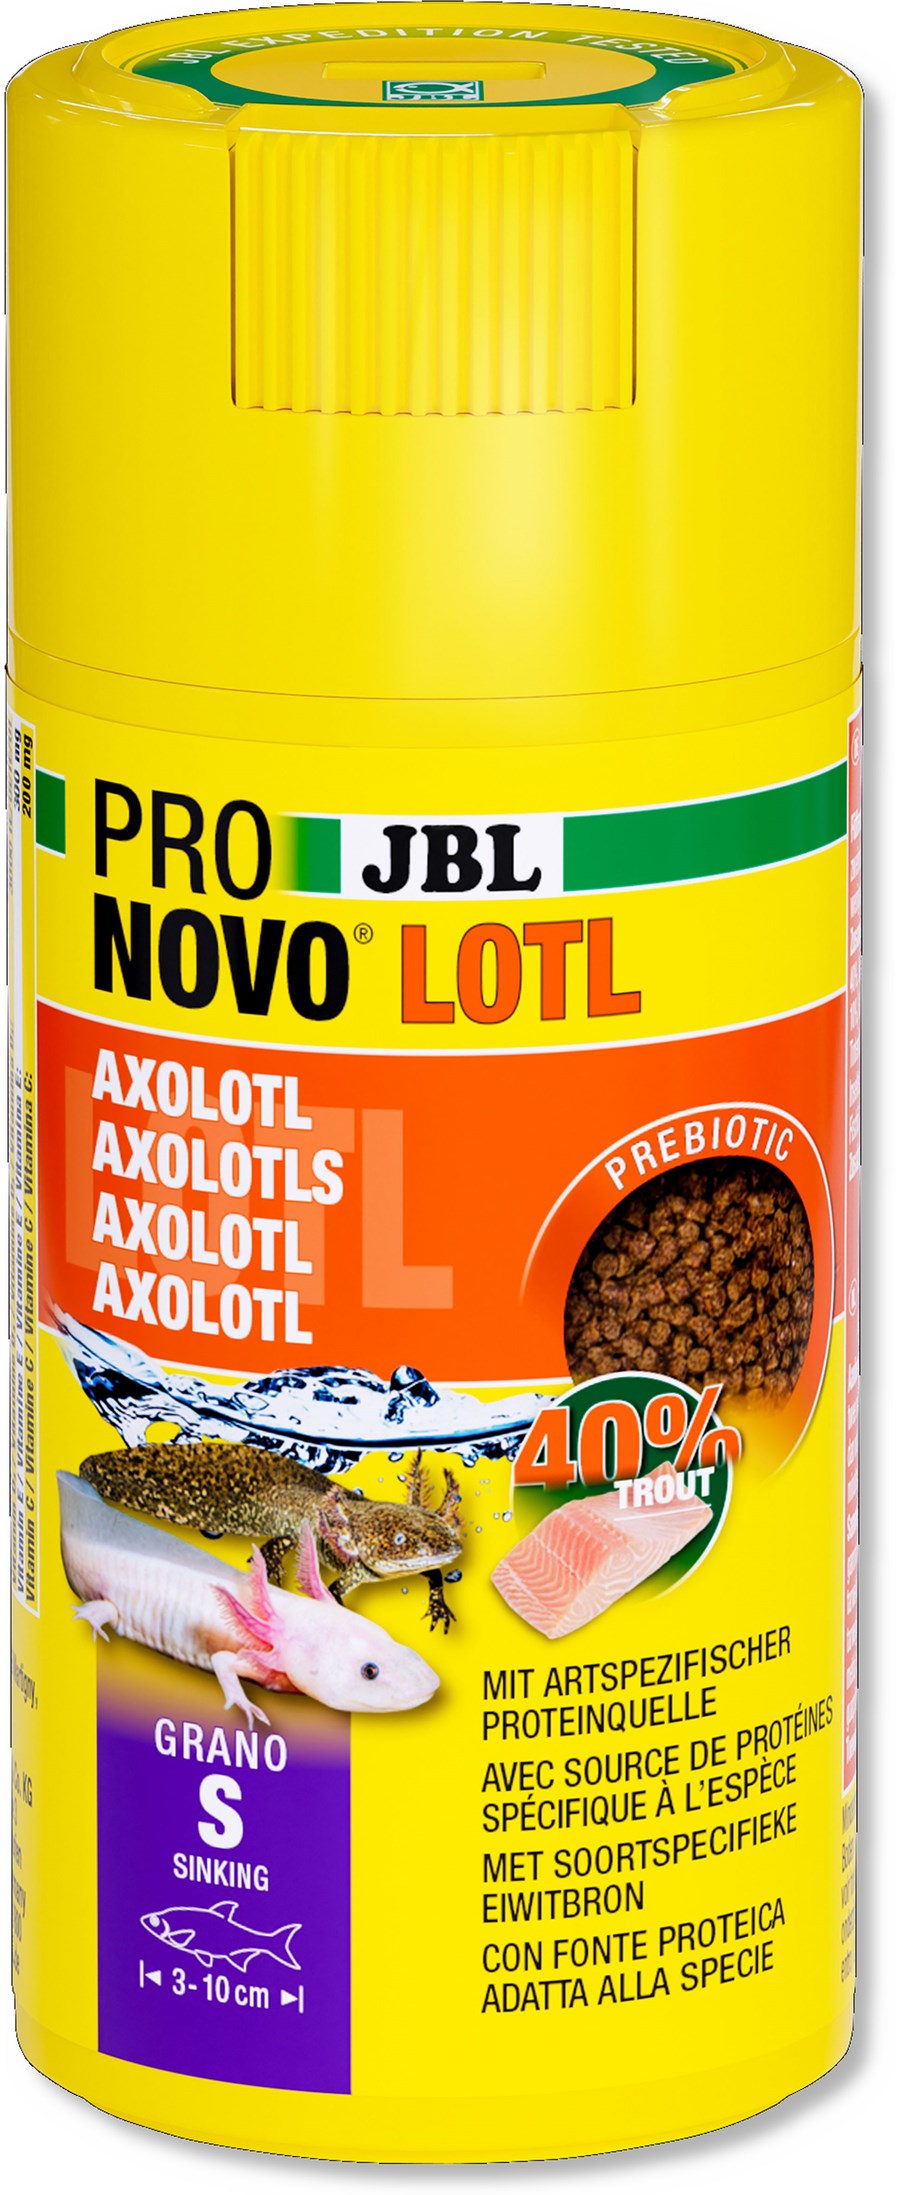 JBL PRONOVO LOTL GRANO S 100ml CLICK